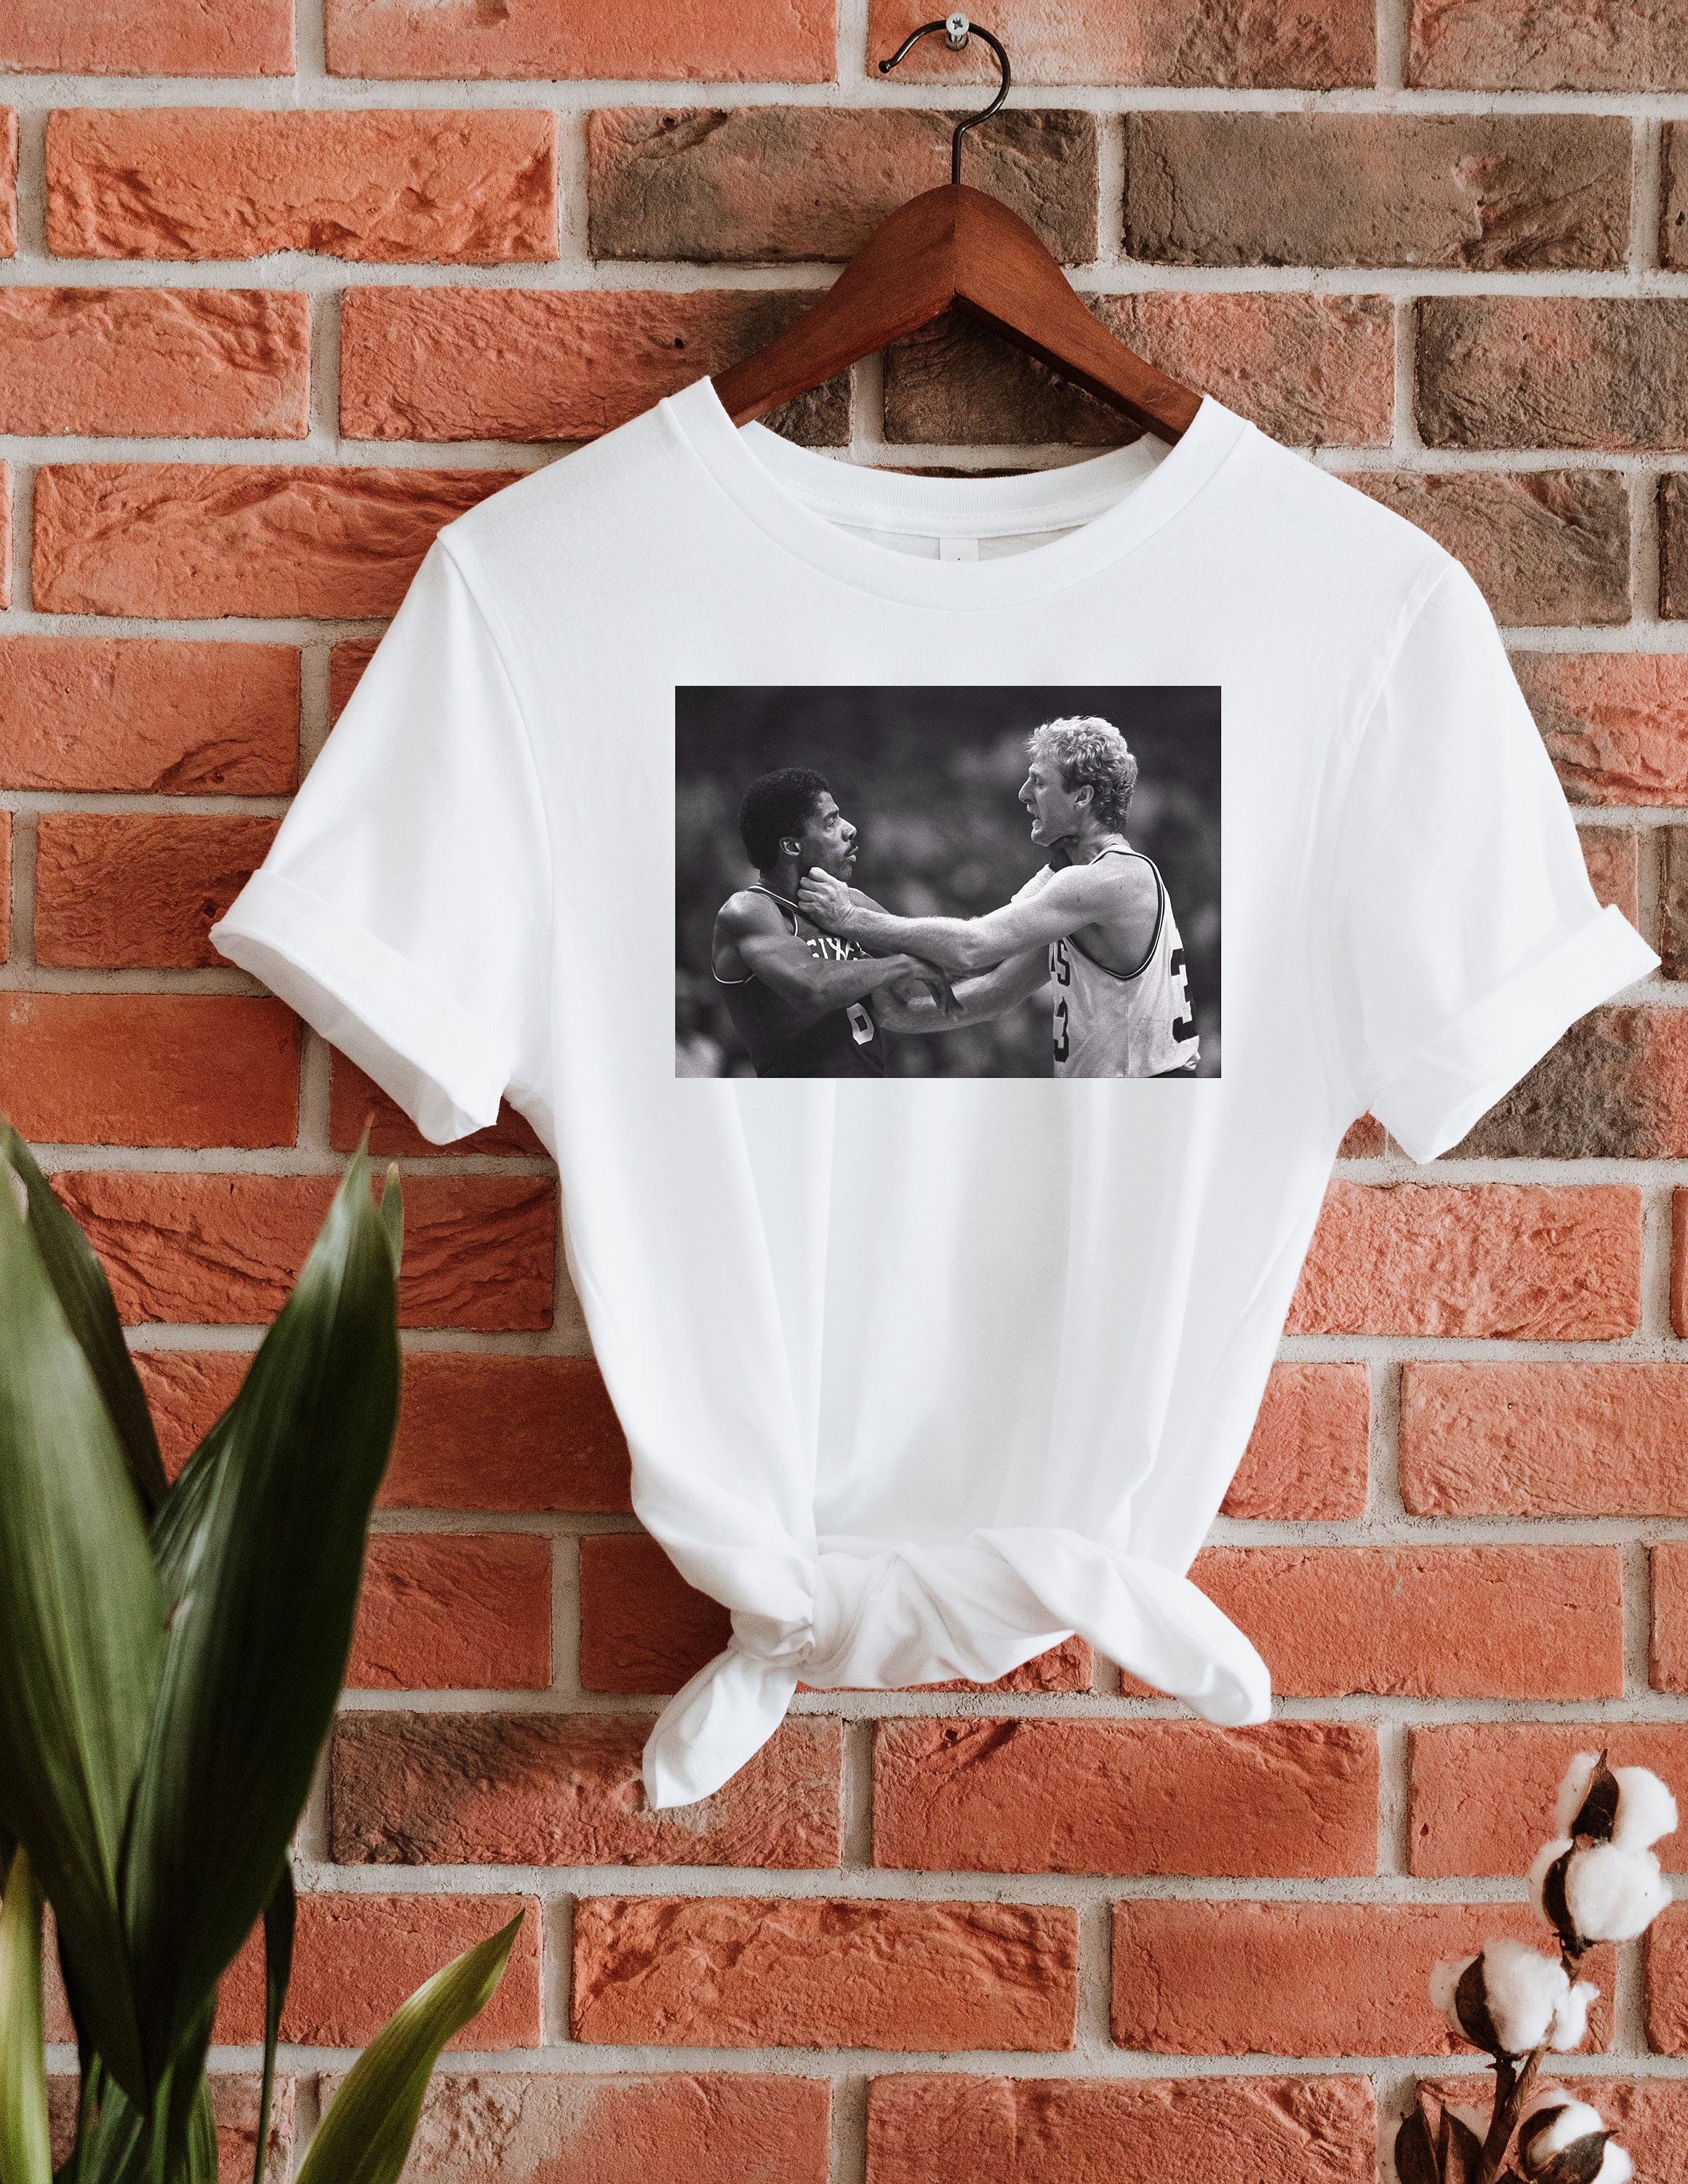 Larry Bird Homage NBA Larry Legend T-Shirt Men's 3XL (New) SOLD OUT